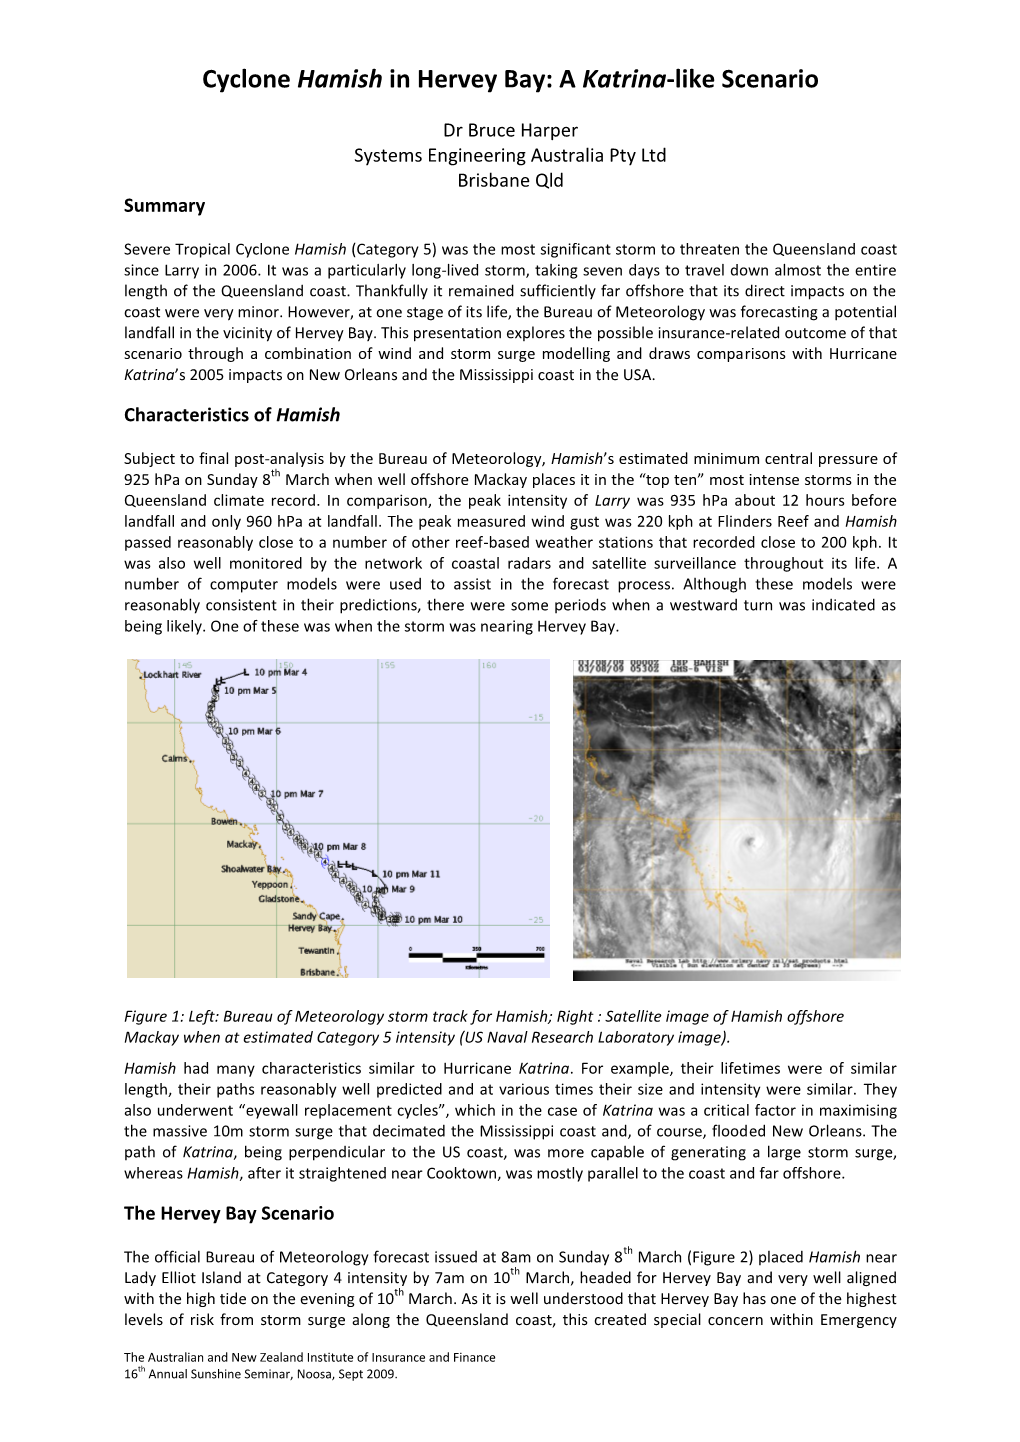 Cyclone Hamish in Hervey Bay: a Katrina-Like Scenario